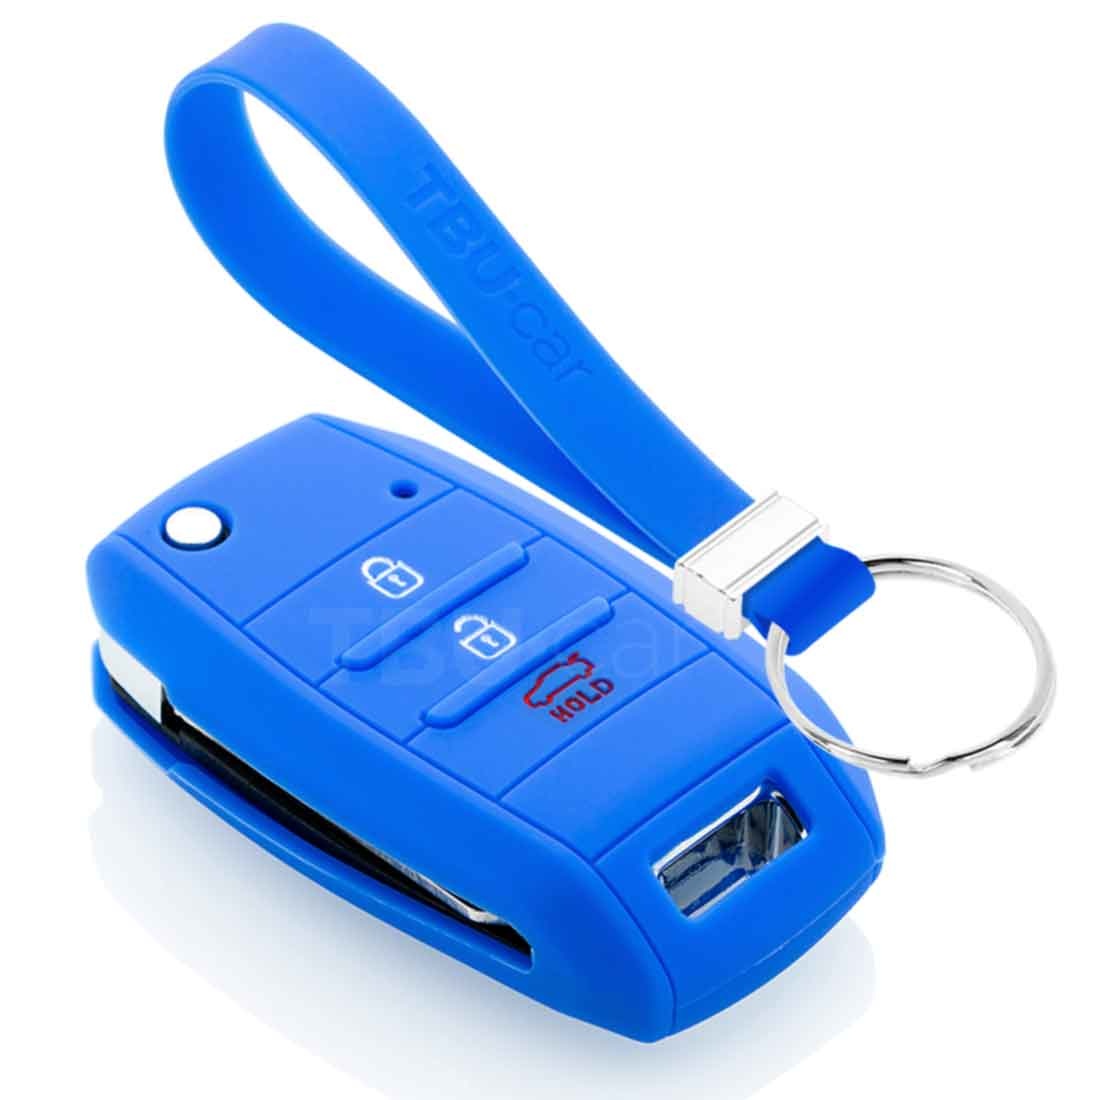 TBU car TBU car Sleutel cover compatibel met Hyundai - Silicone sleutelhoesje - beschermhoesje autosleutel - Blauw